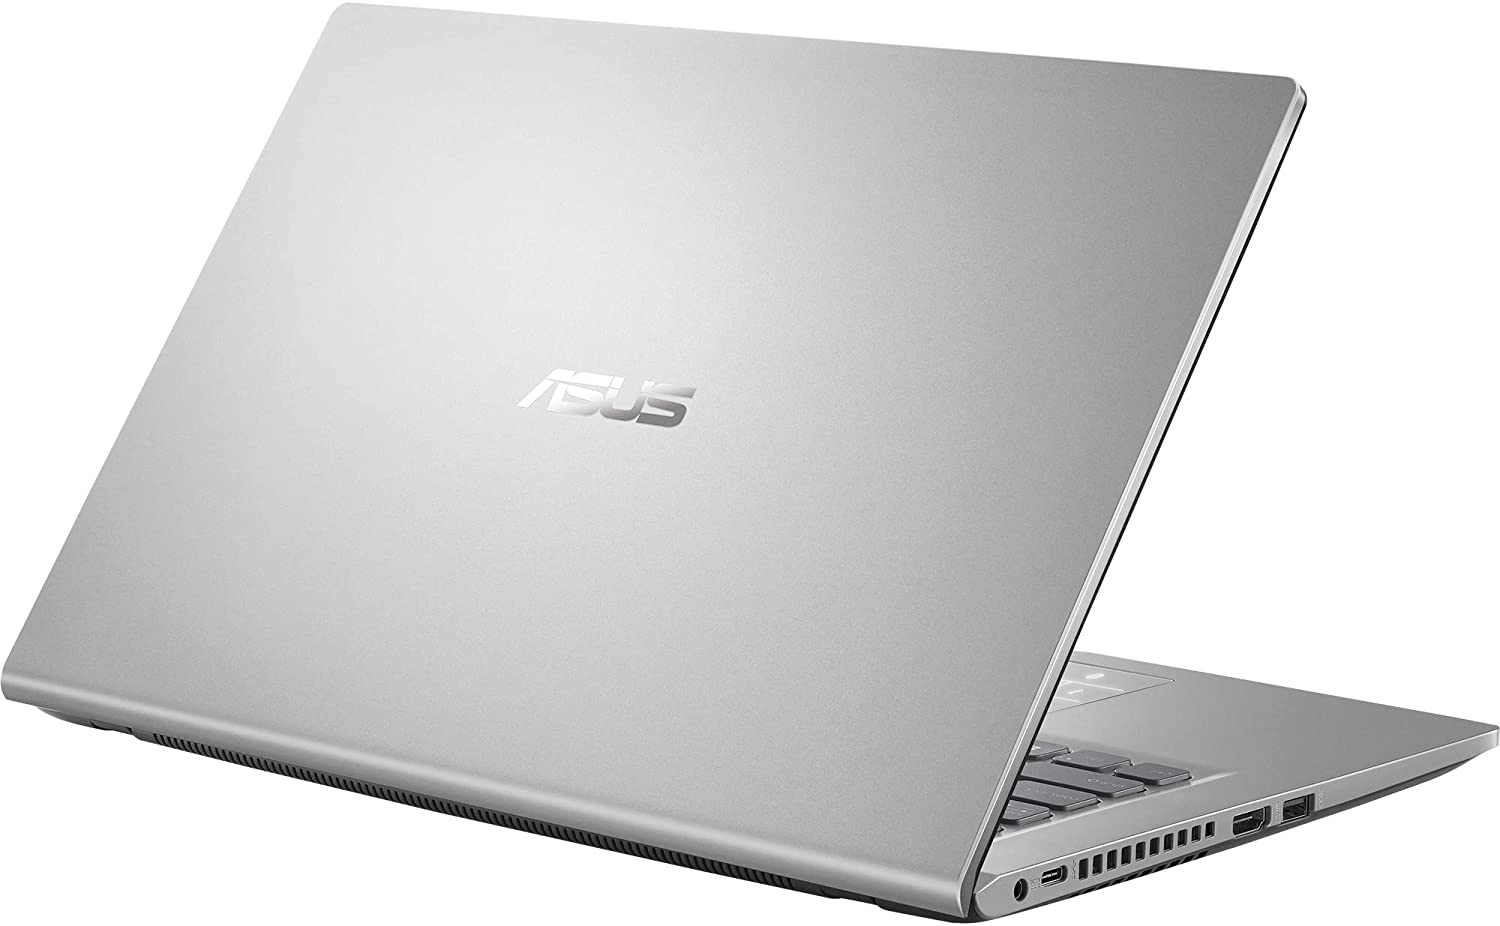 Asus F415JA-EK395T laptop image